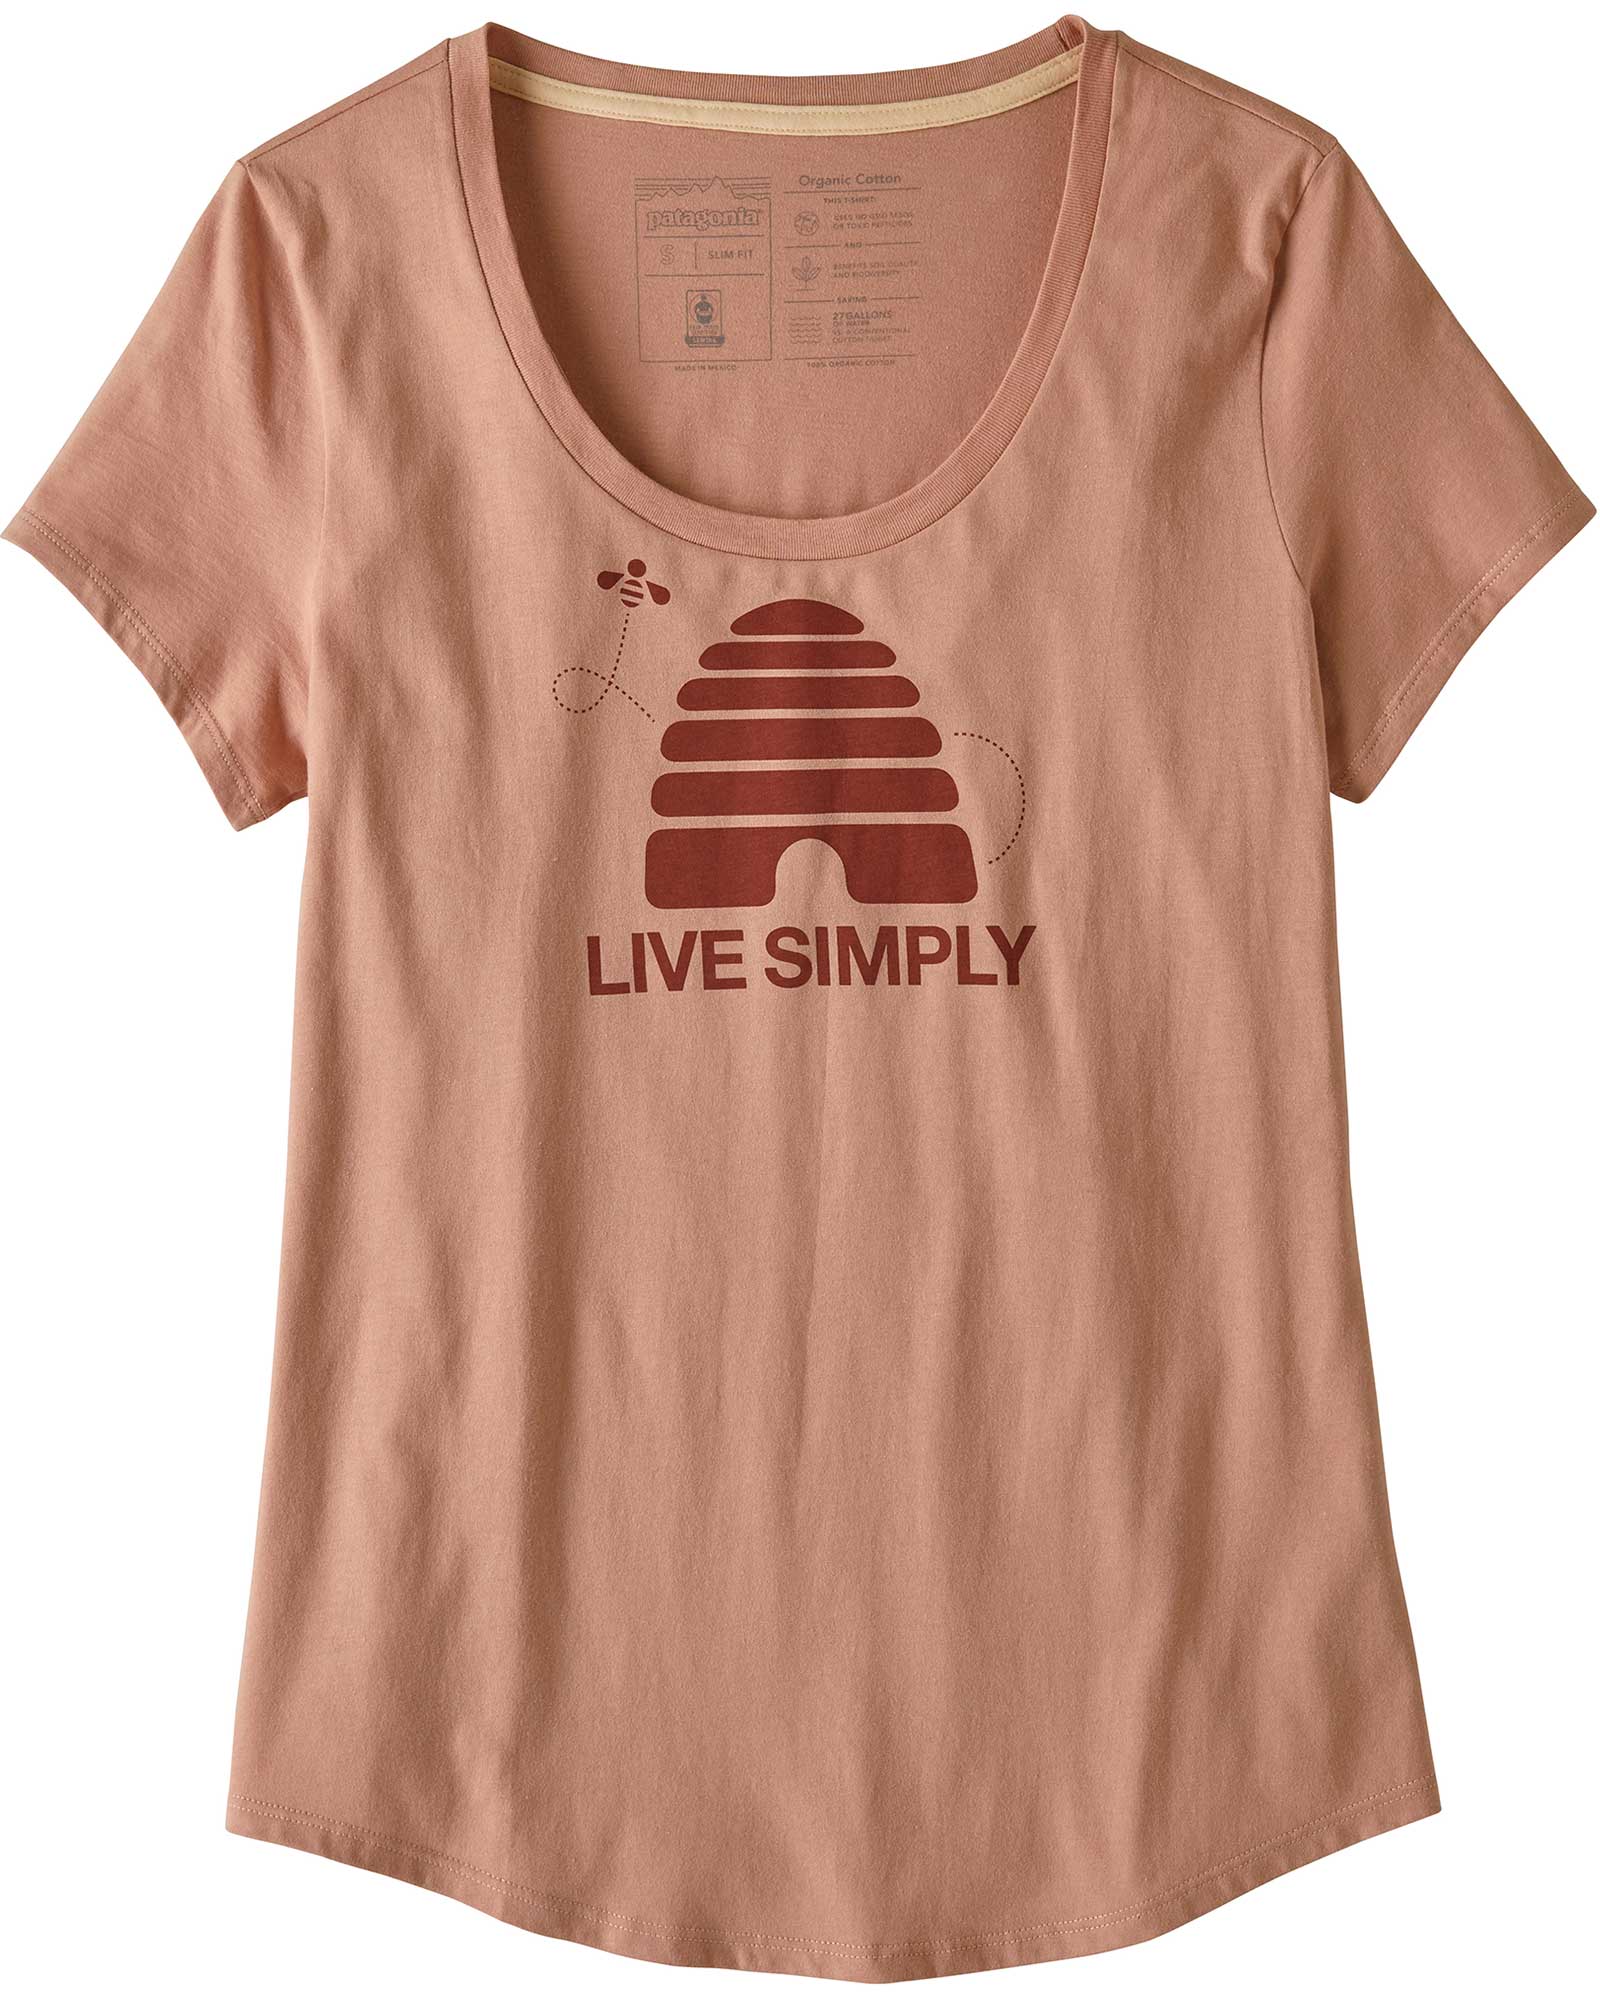 Patagonia Live Simply Hive Organic Women’s Scoop T Shirt - Scotch Pink M